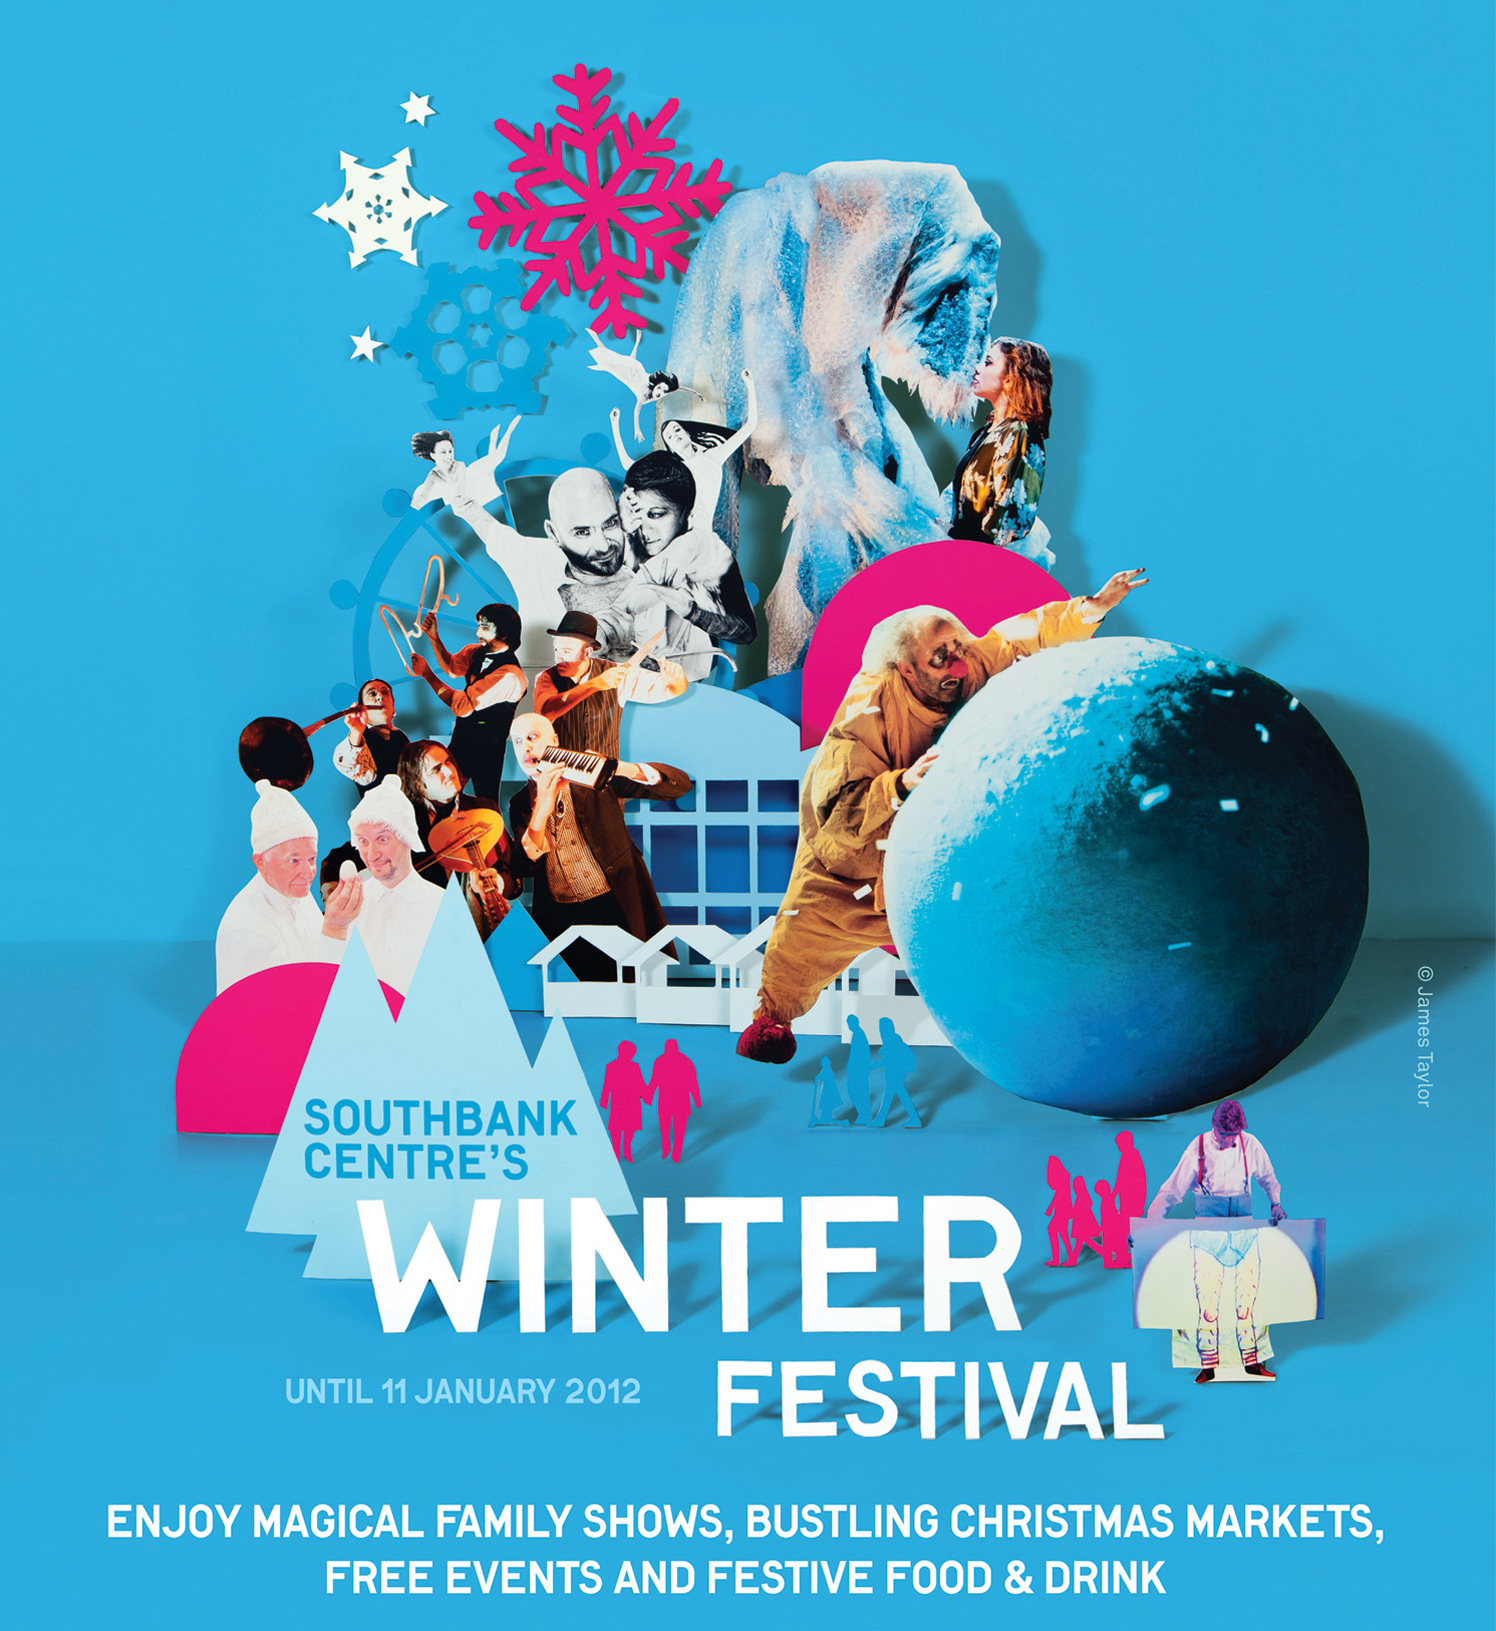 Southbank Centre's Winter Festival